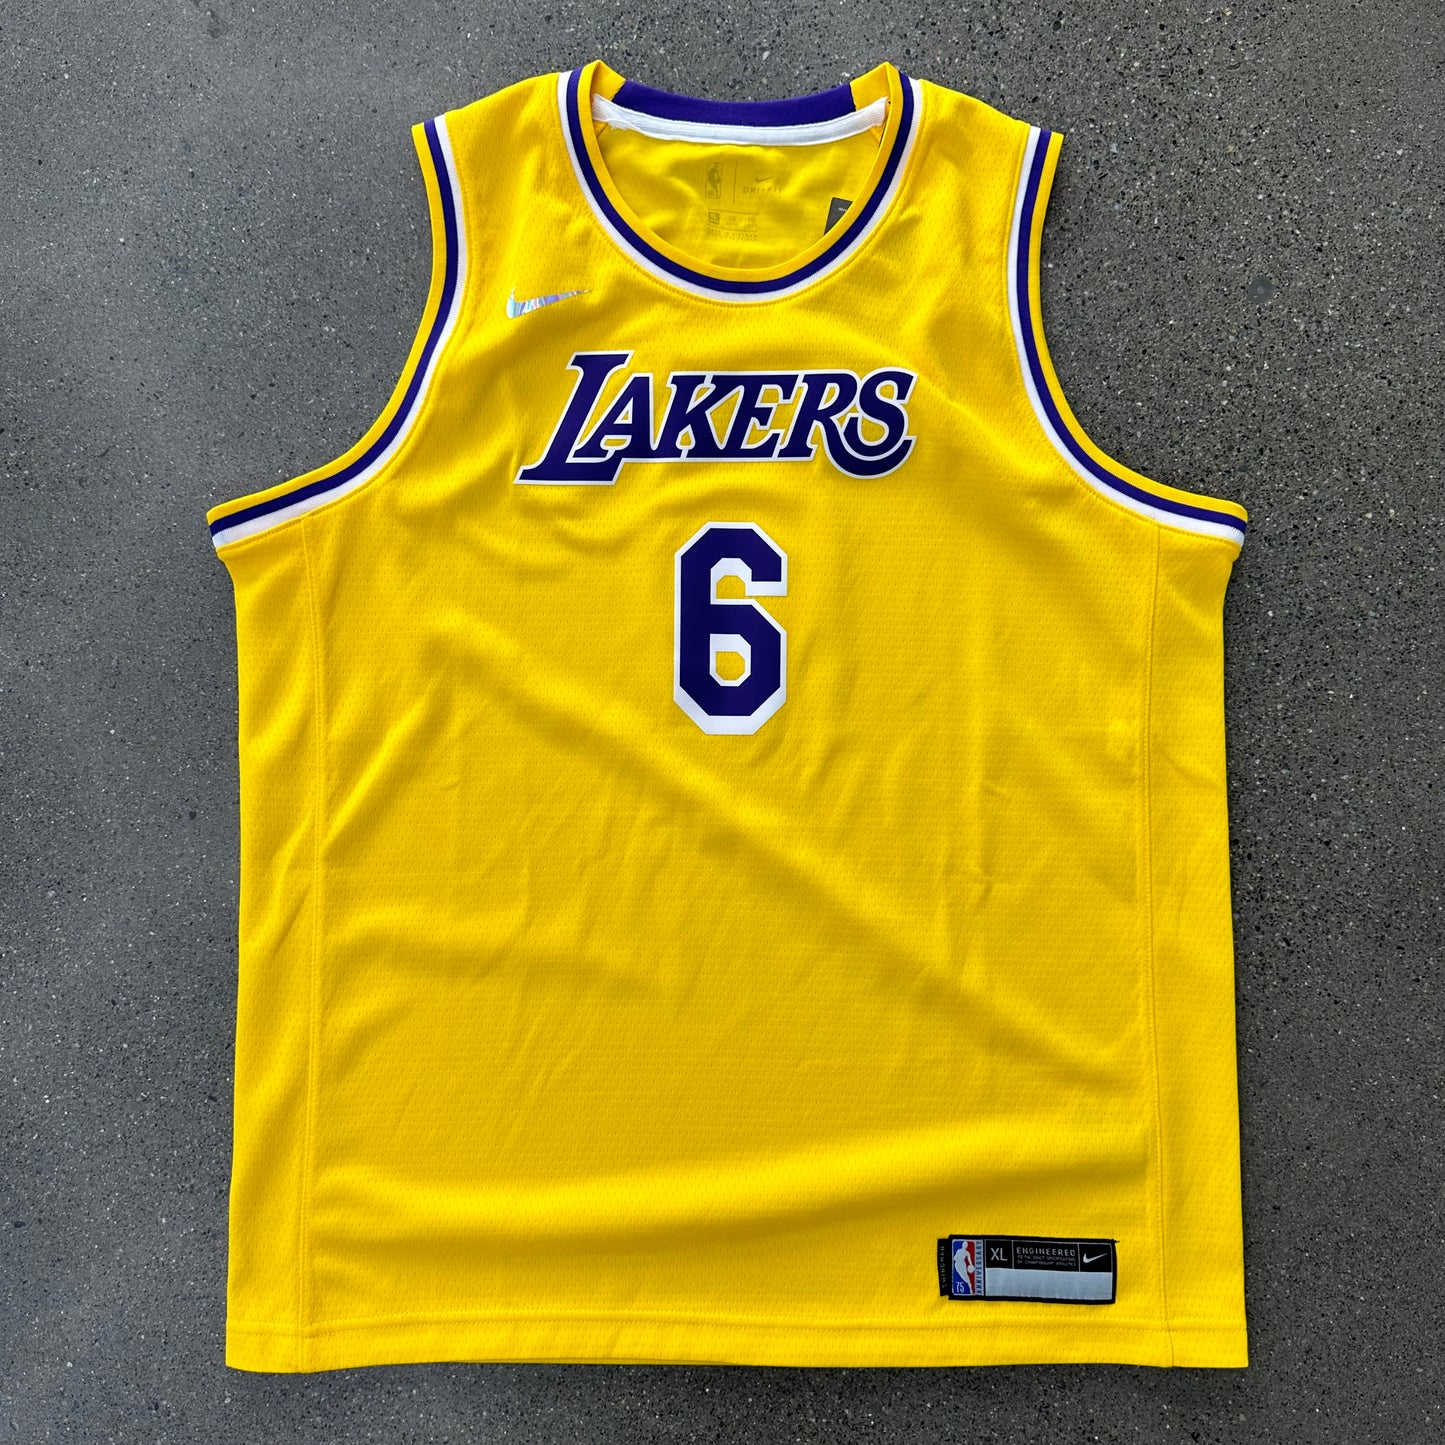 Lebron James Yellow #6 Lakers Jersey SZ XL (NEW)